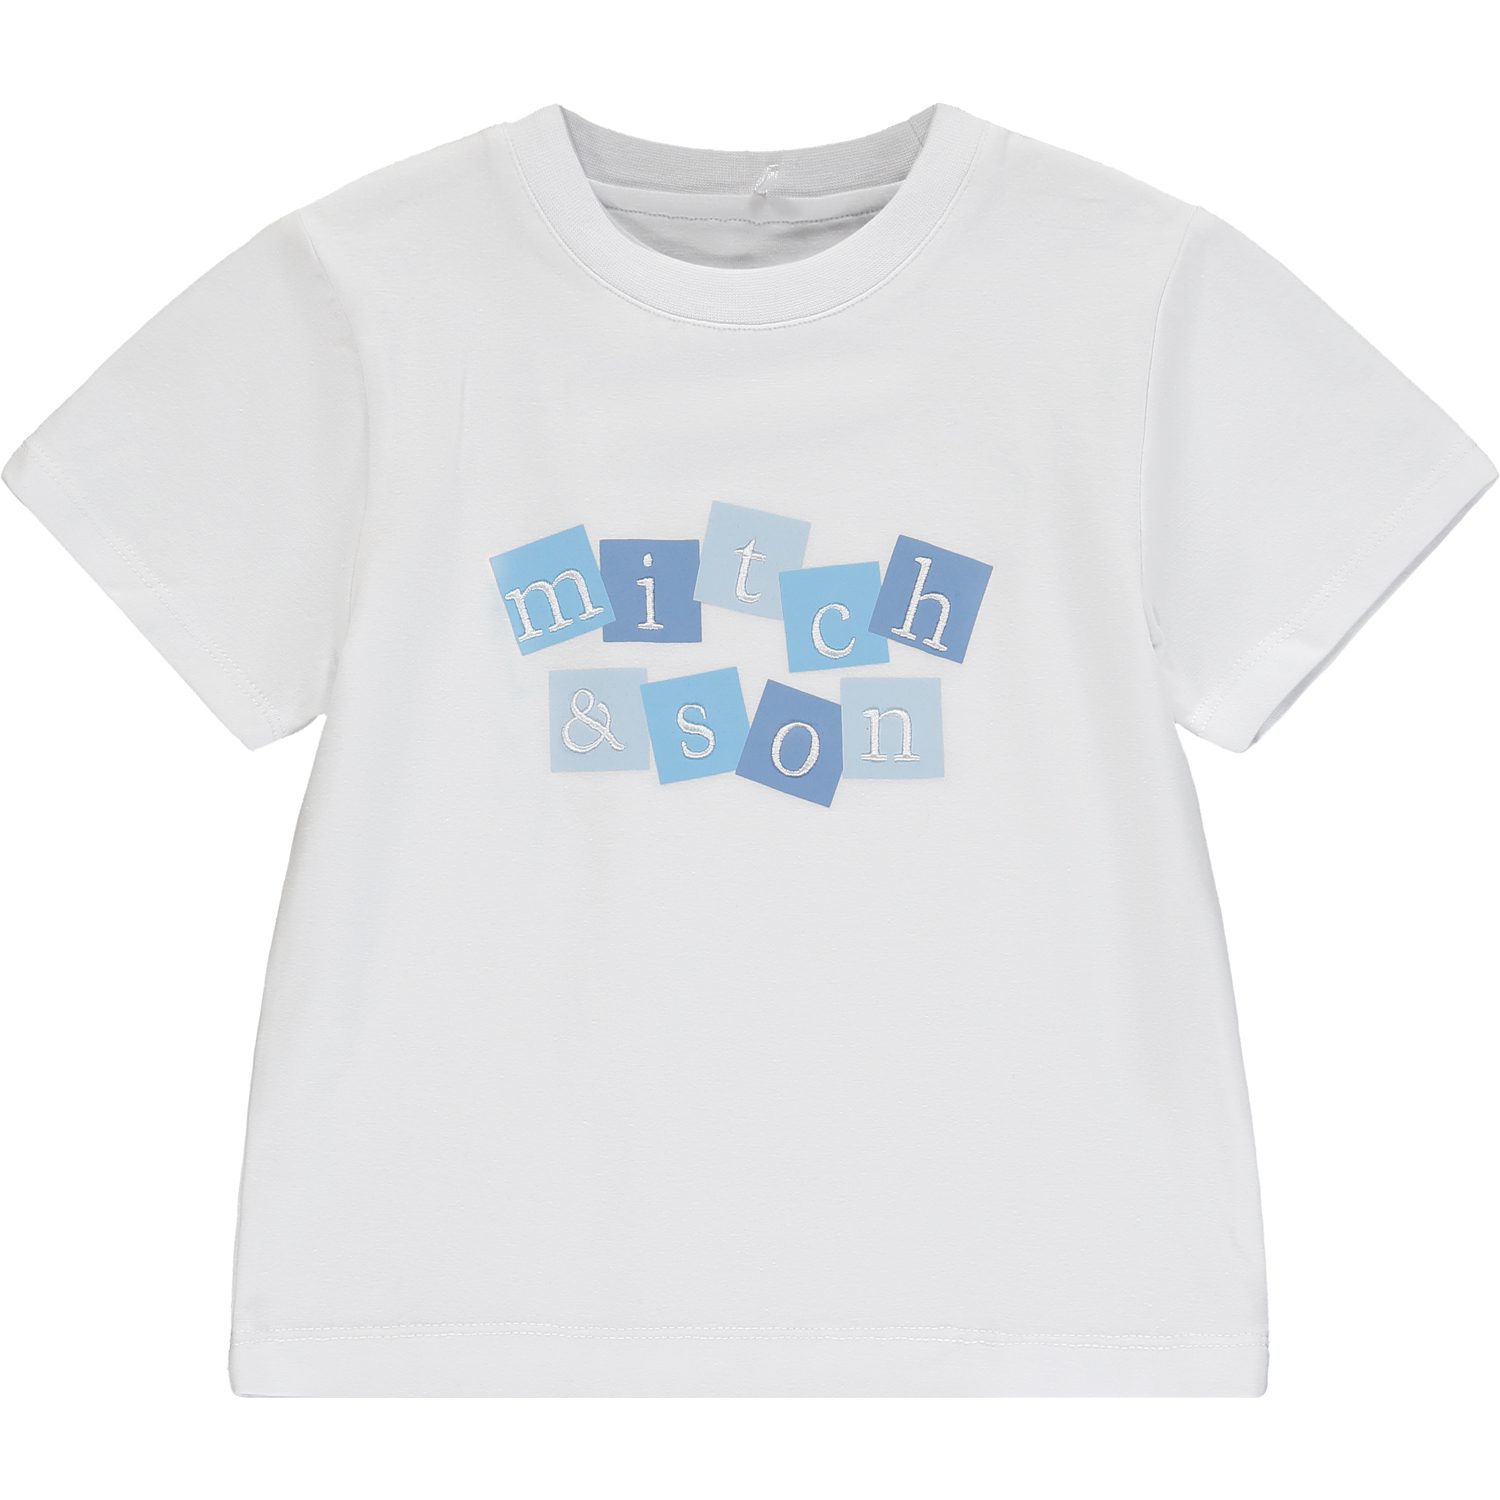 Mitch&Son Jack wit t-shirt met logo opdruk